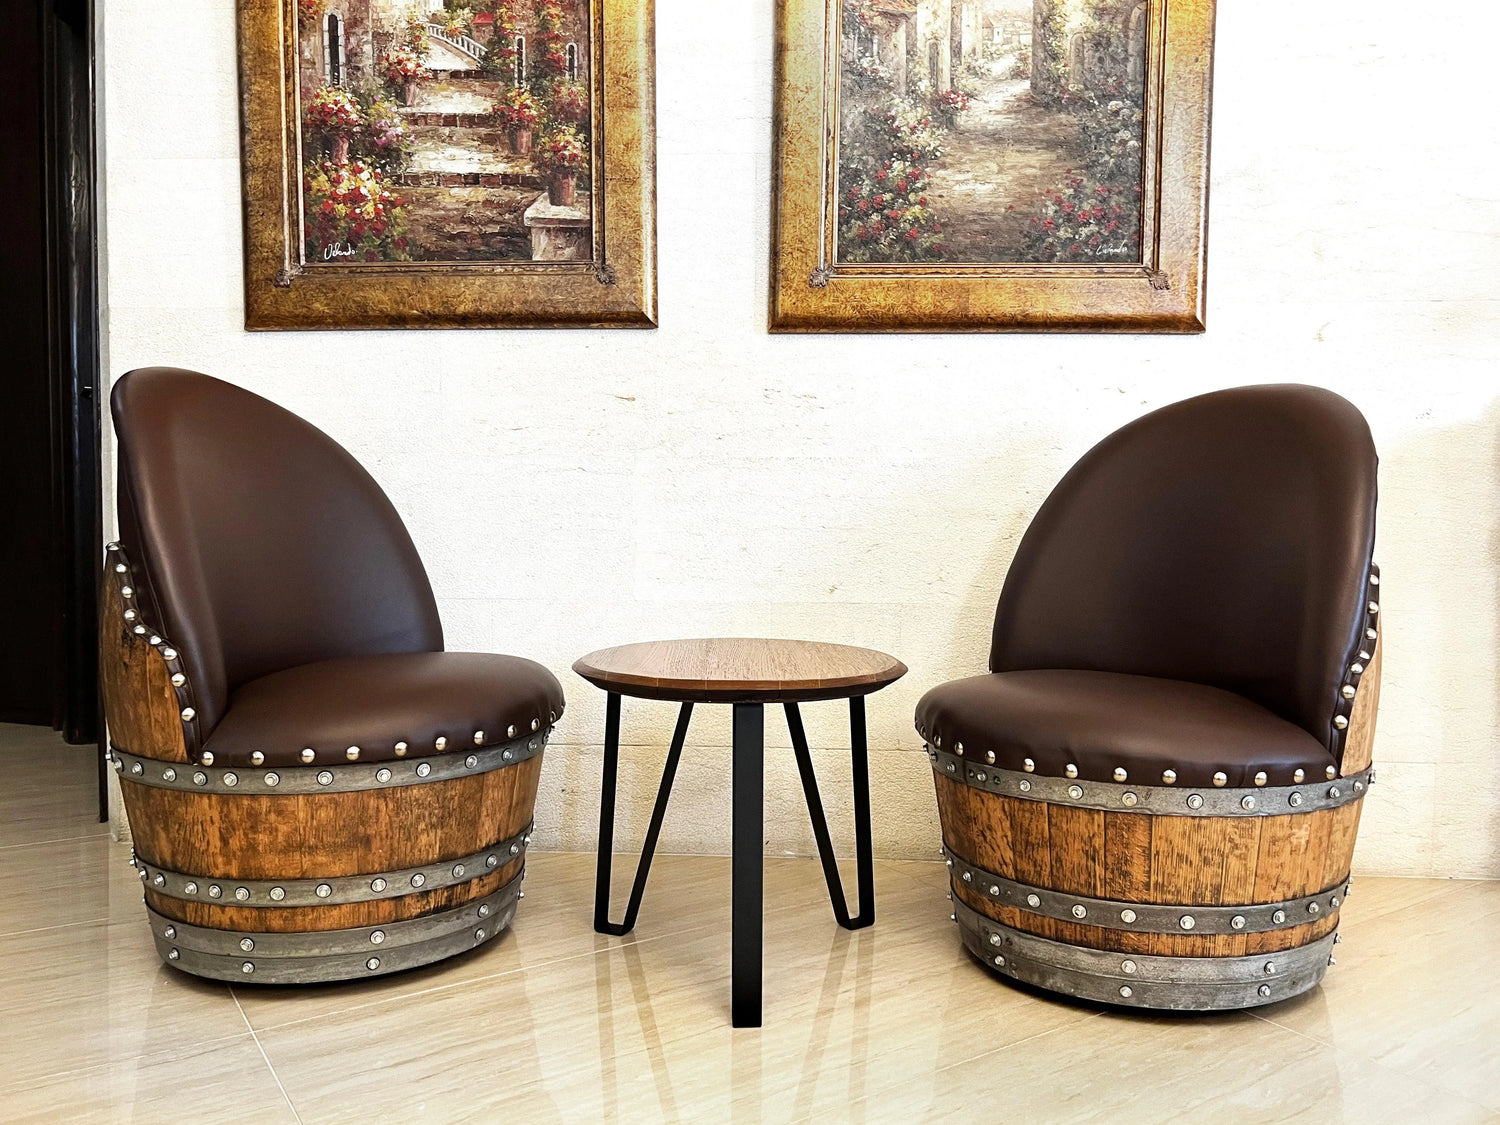 Barrel Furniture for Every Room in Your Home - Oak Wood Wine Barrels